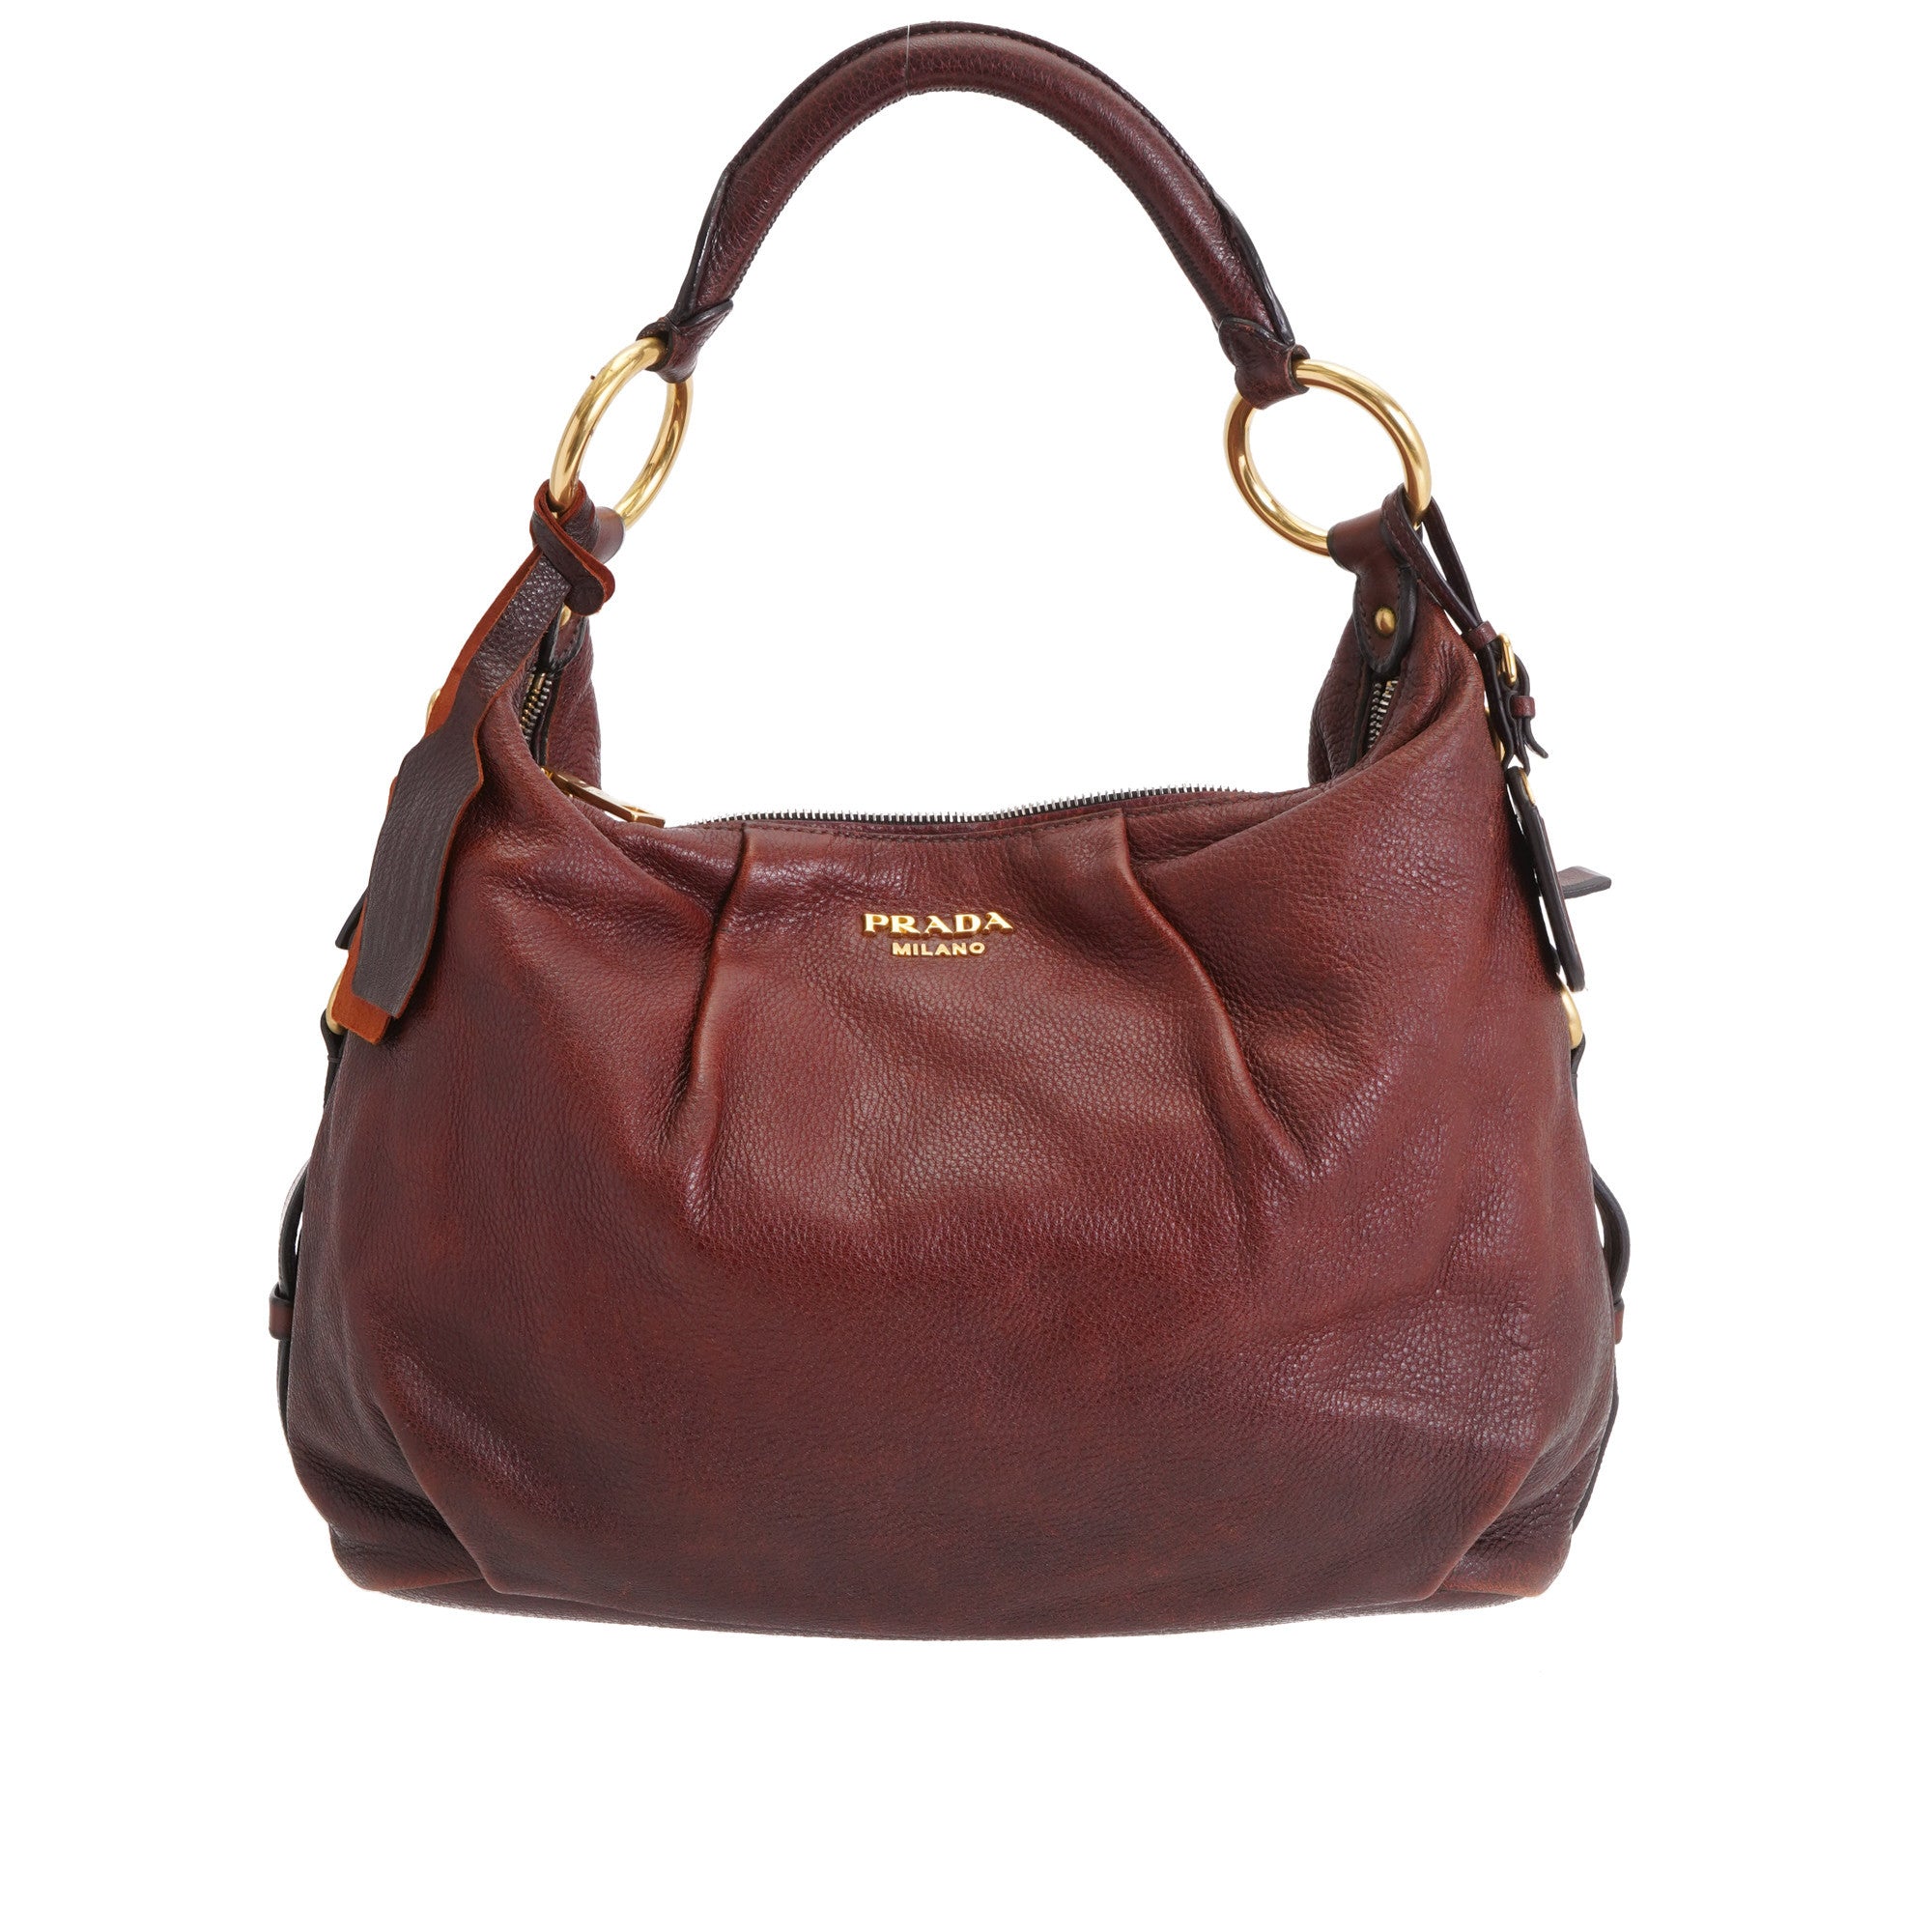 Prada | Authentic Used Bags & Handbags | LXR Canada